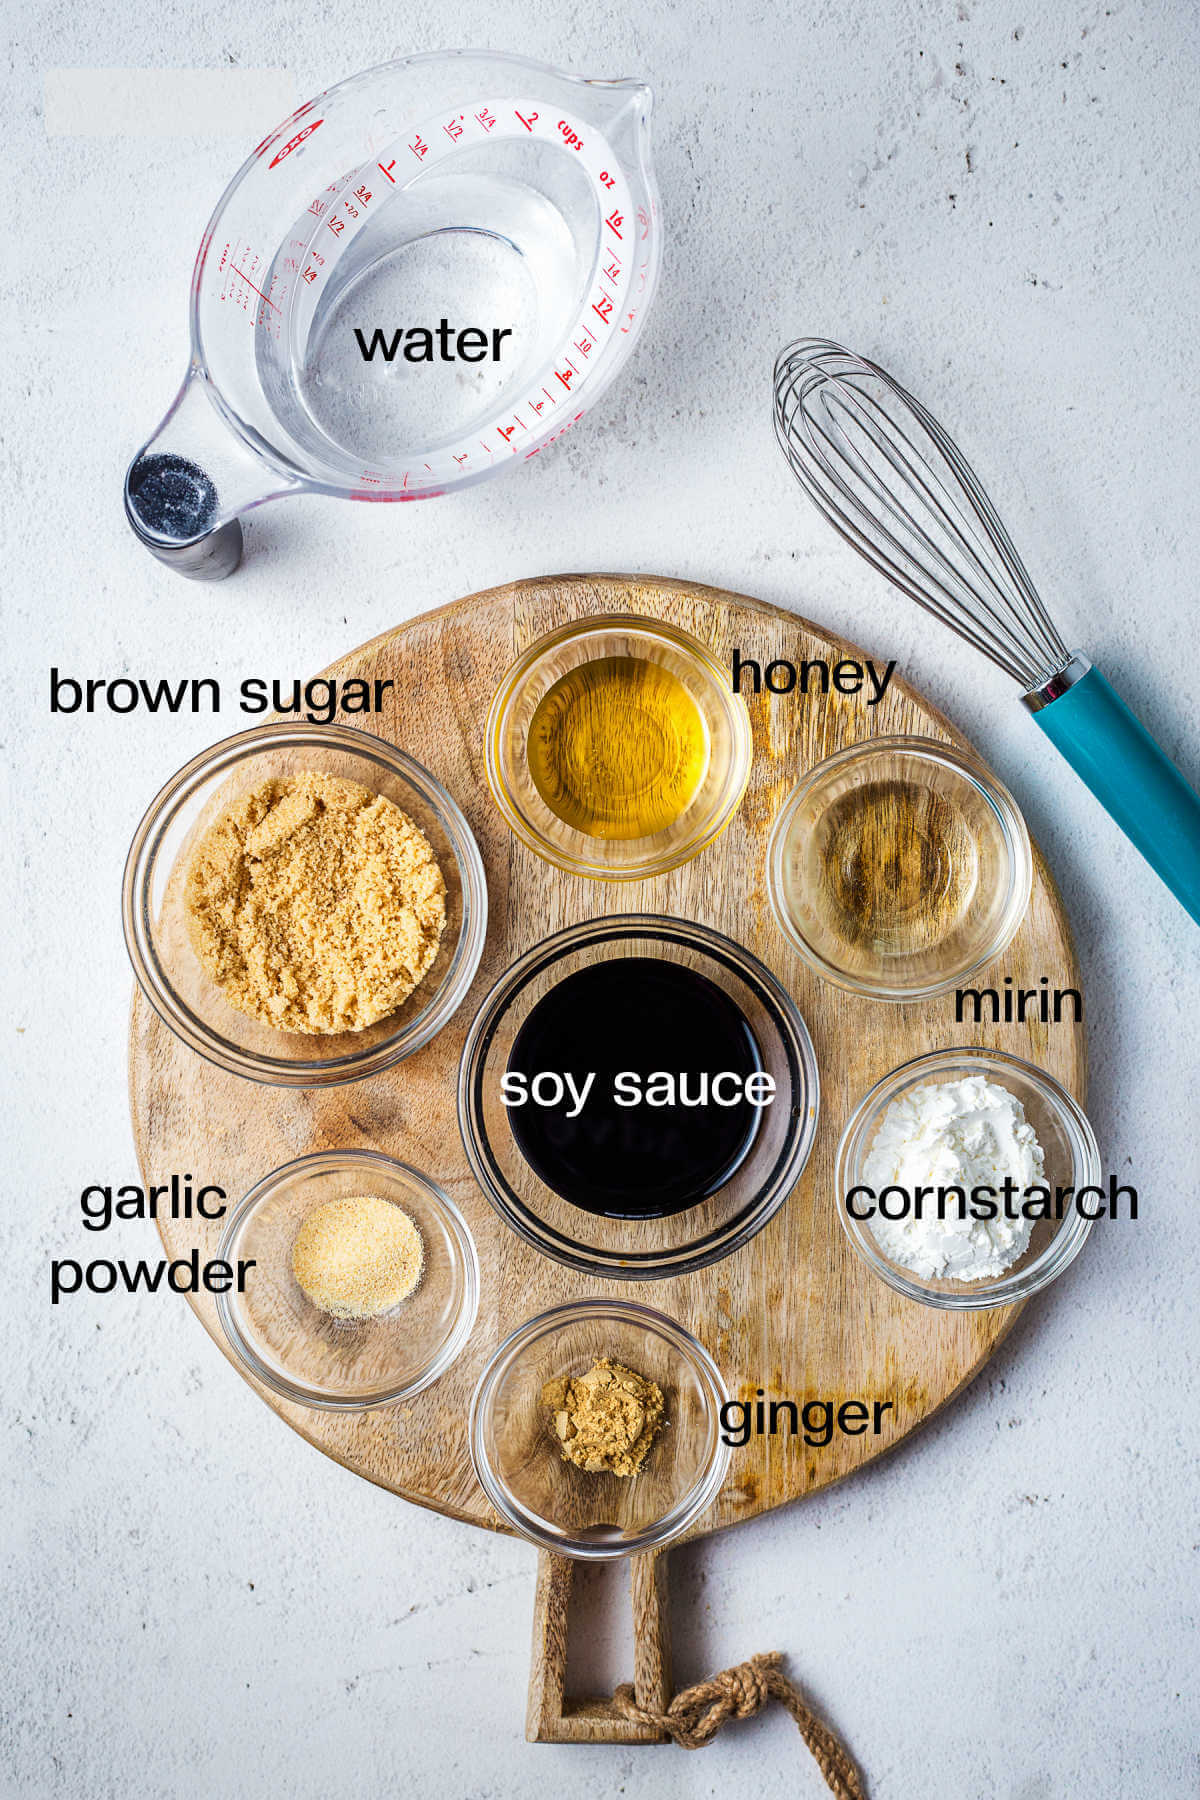 ingredients for homemade teriyaki sauce on a table.